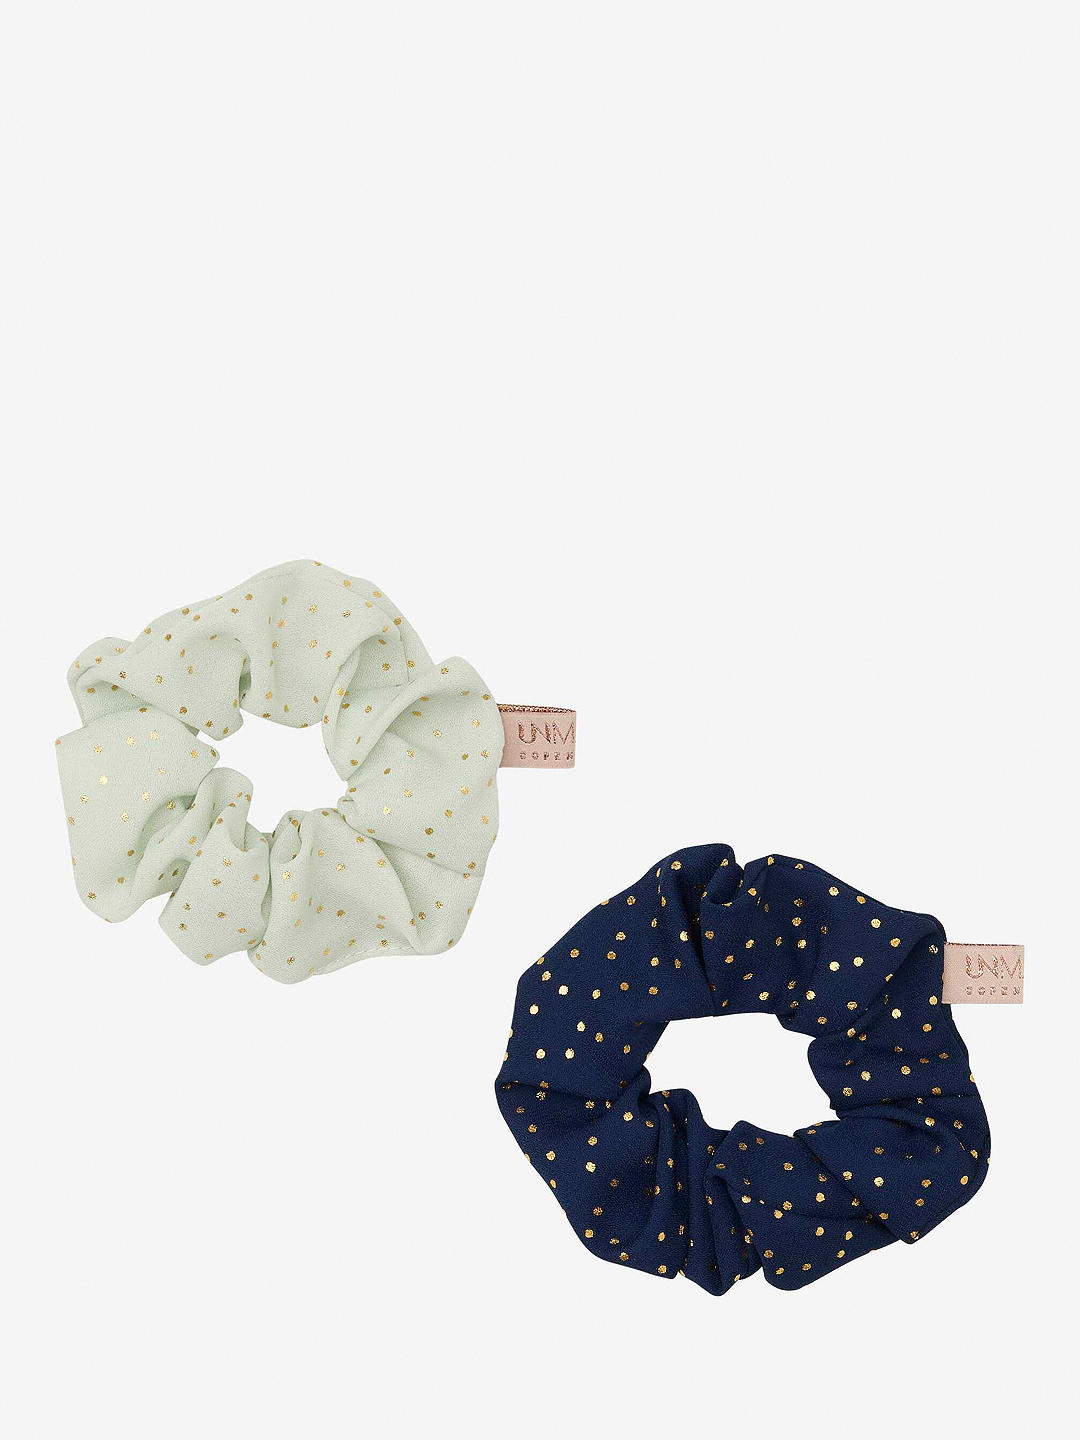 Unmade Copenhagen Vicca Spot Print Scrunchies, Pack of 2, Blue/Light Blue